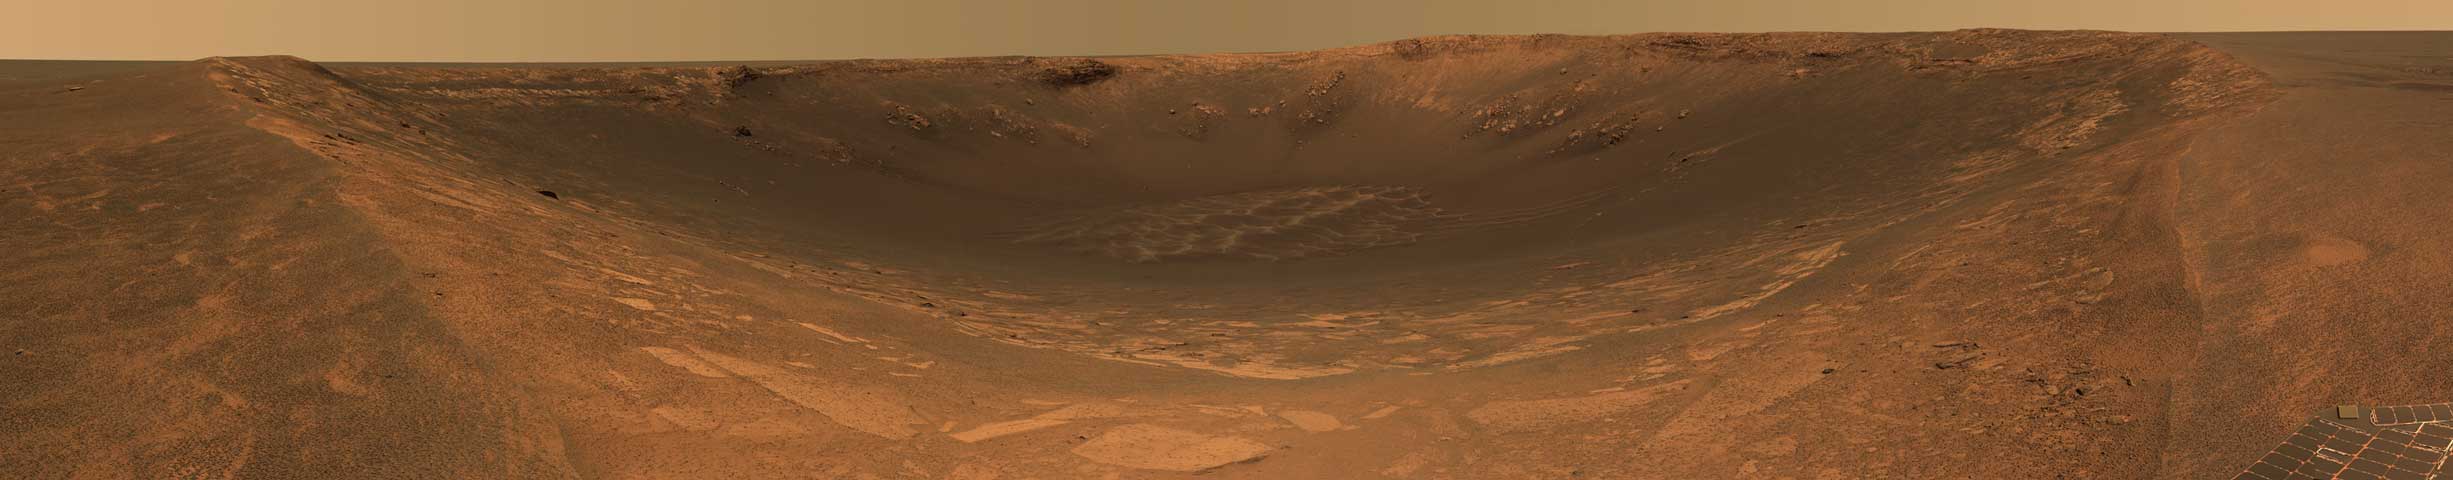 Cratera Endurance em Marte